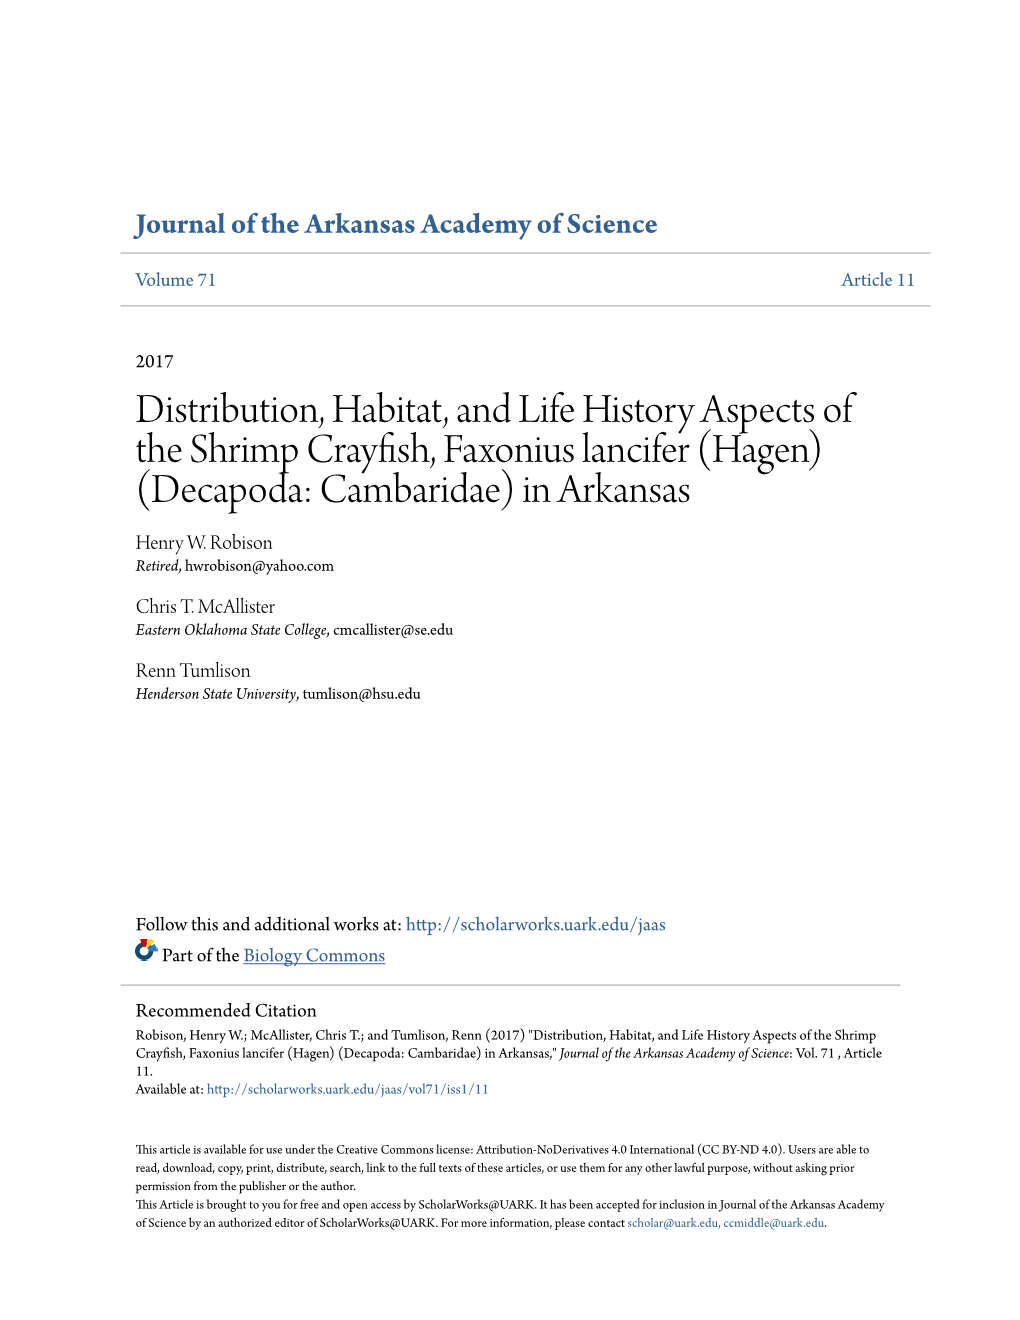 Distribution, Habitat, and Life History Aspects of the Shrimp Crayfish, Faxonius Lancifer (Hagen) (Decapoda: Cambaridae) in Arkansas Henry W